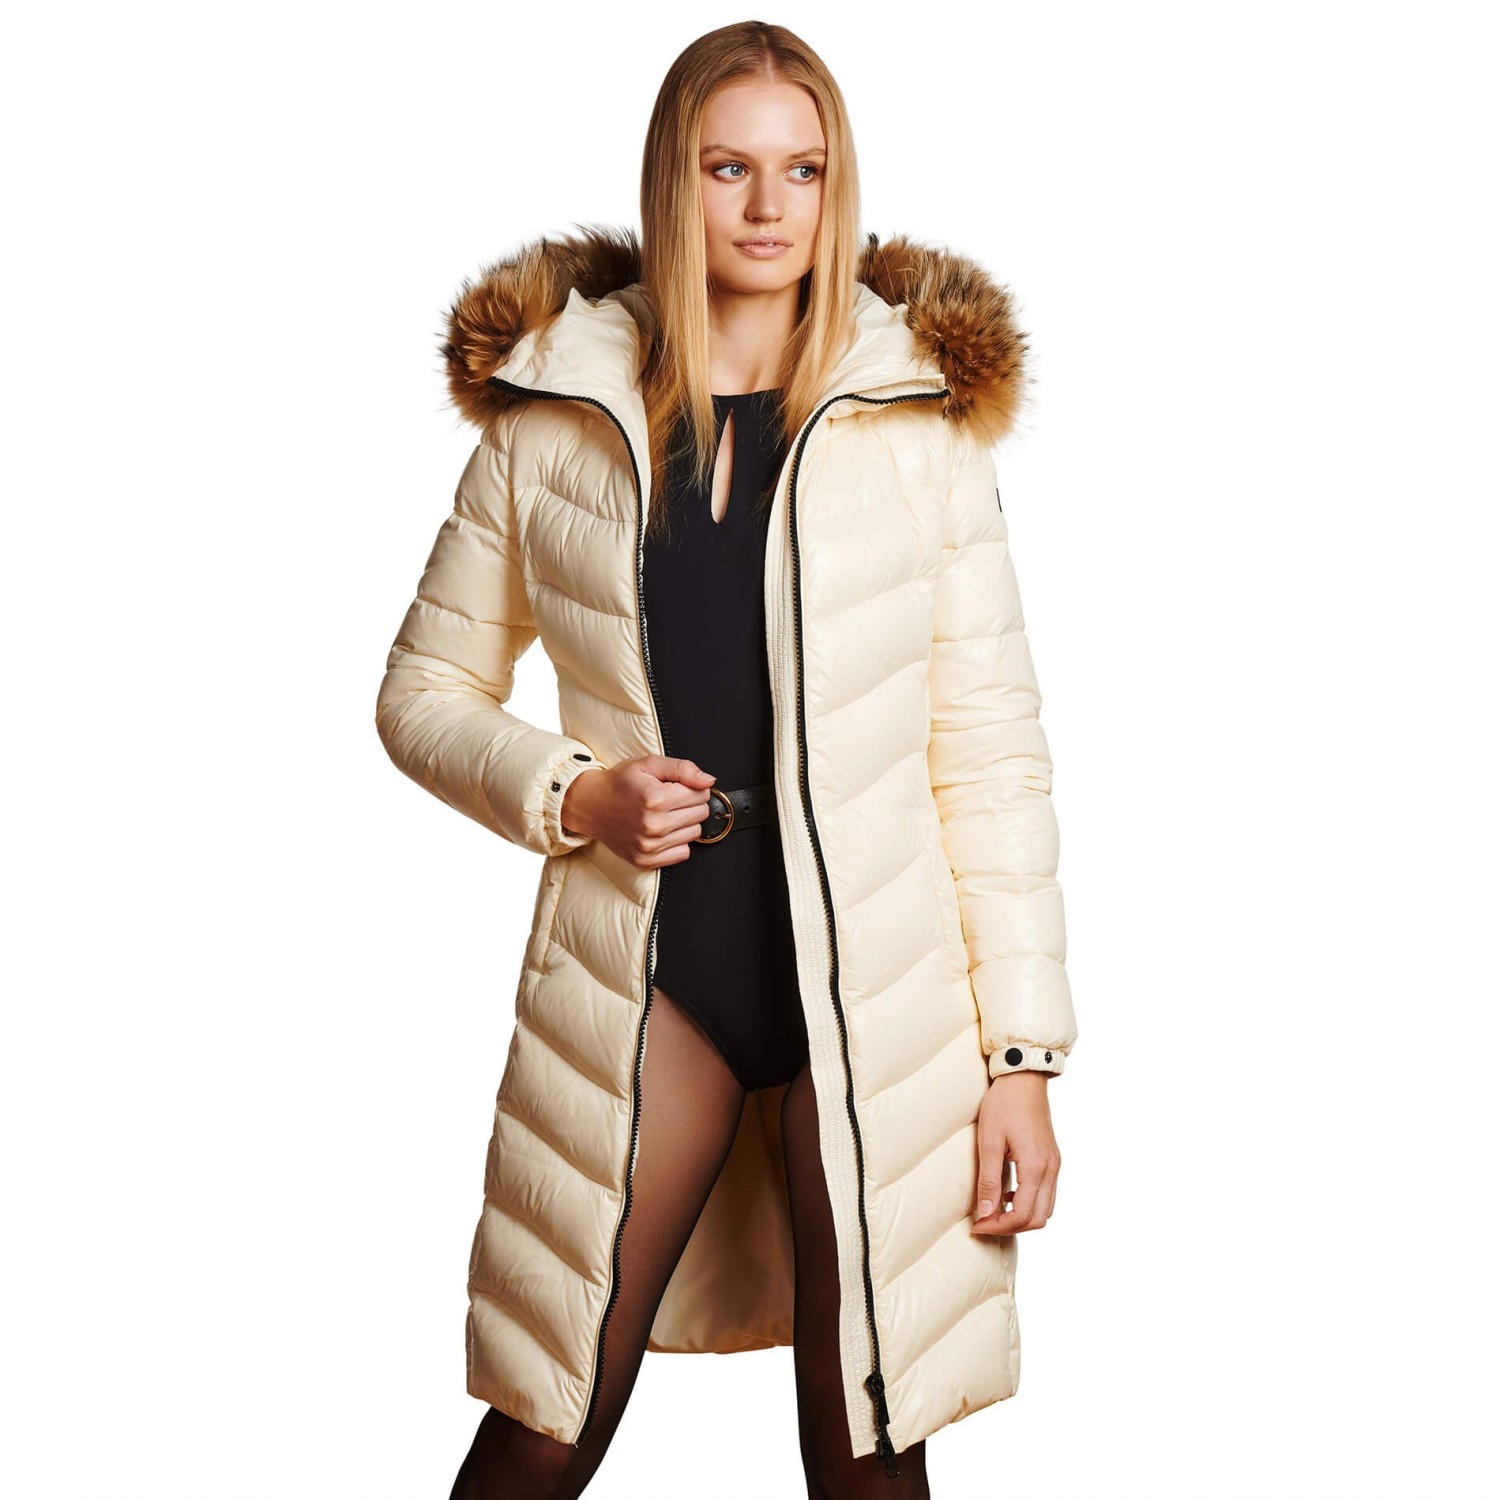 Long down coat with Fur Hood "IceWhite" welovefurs